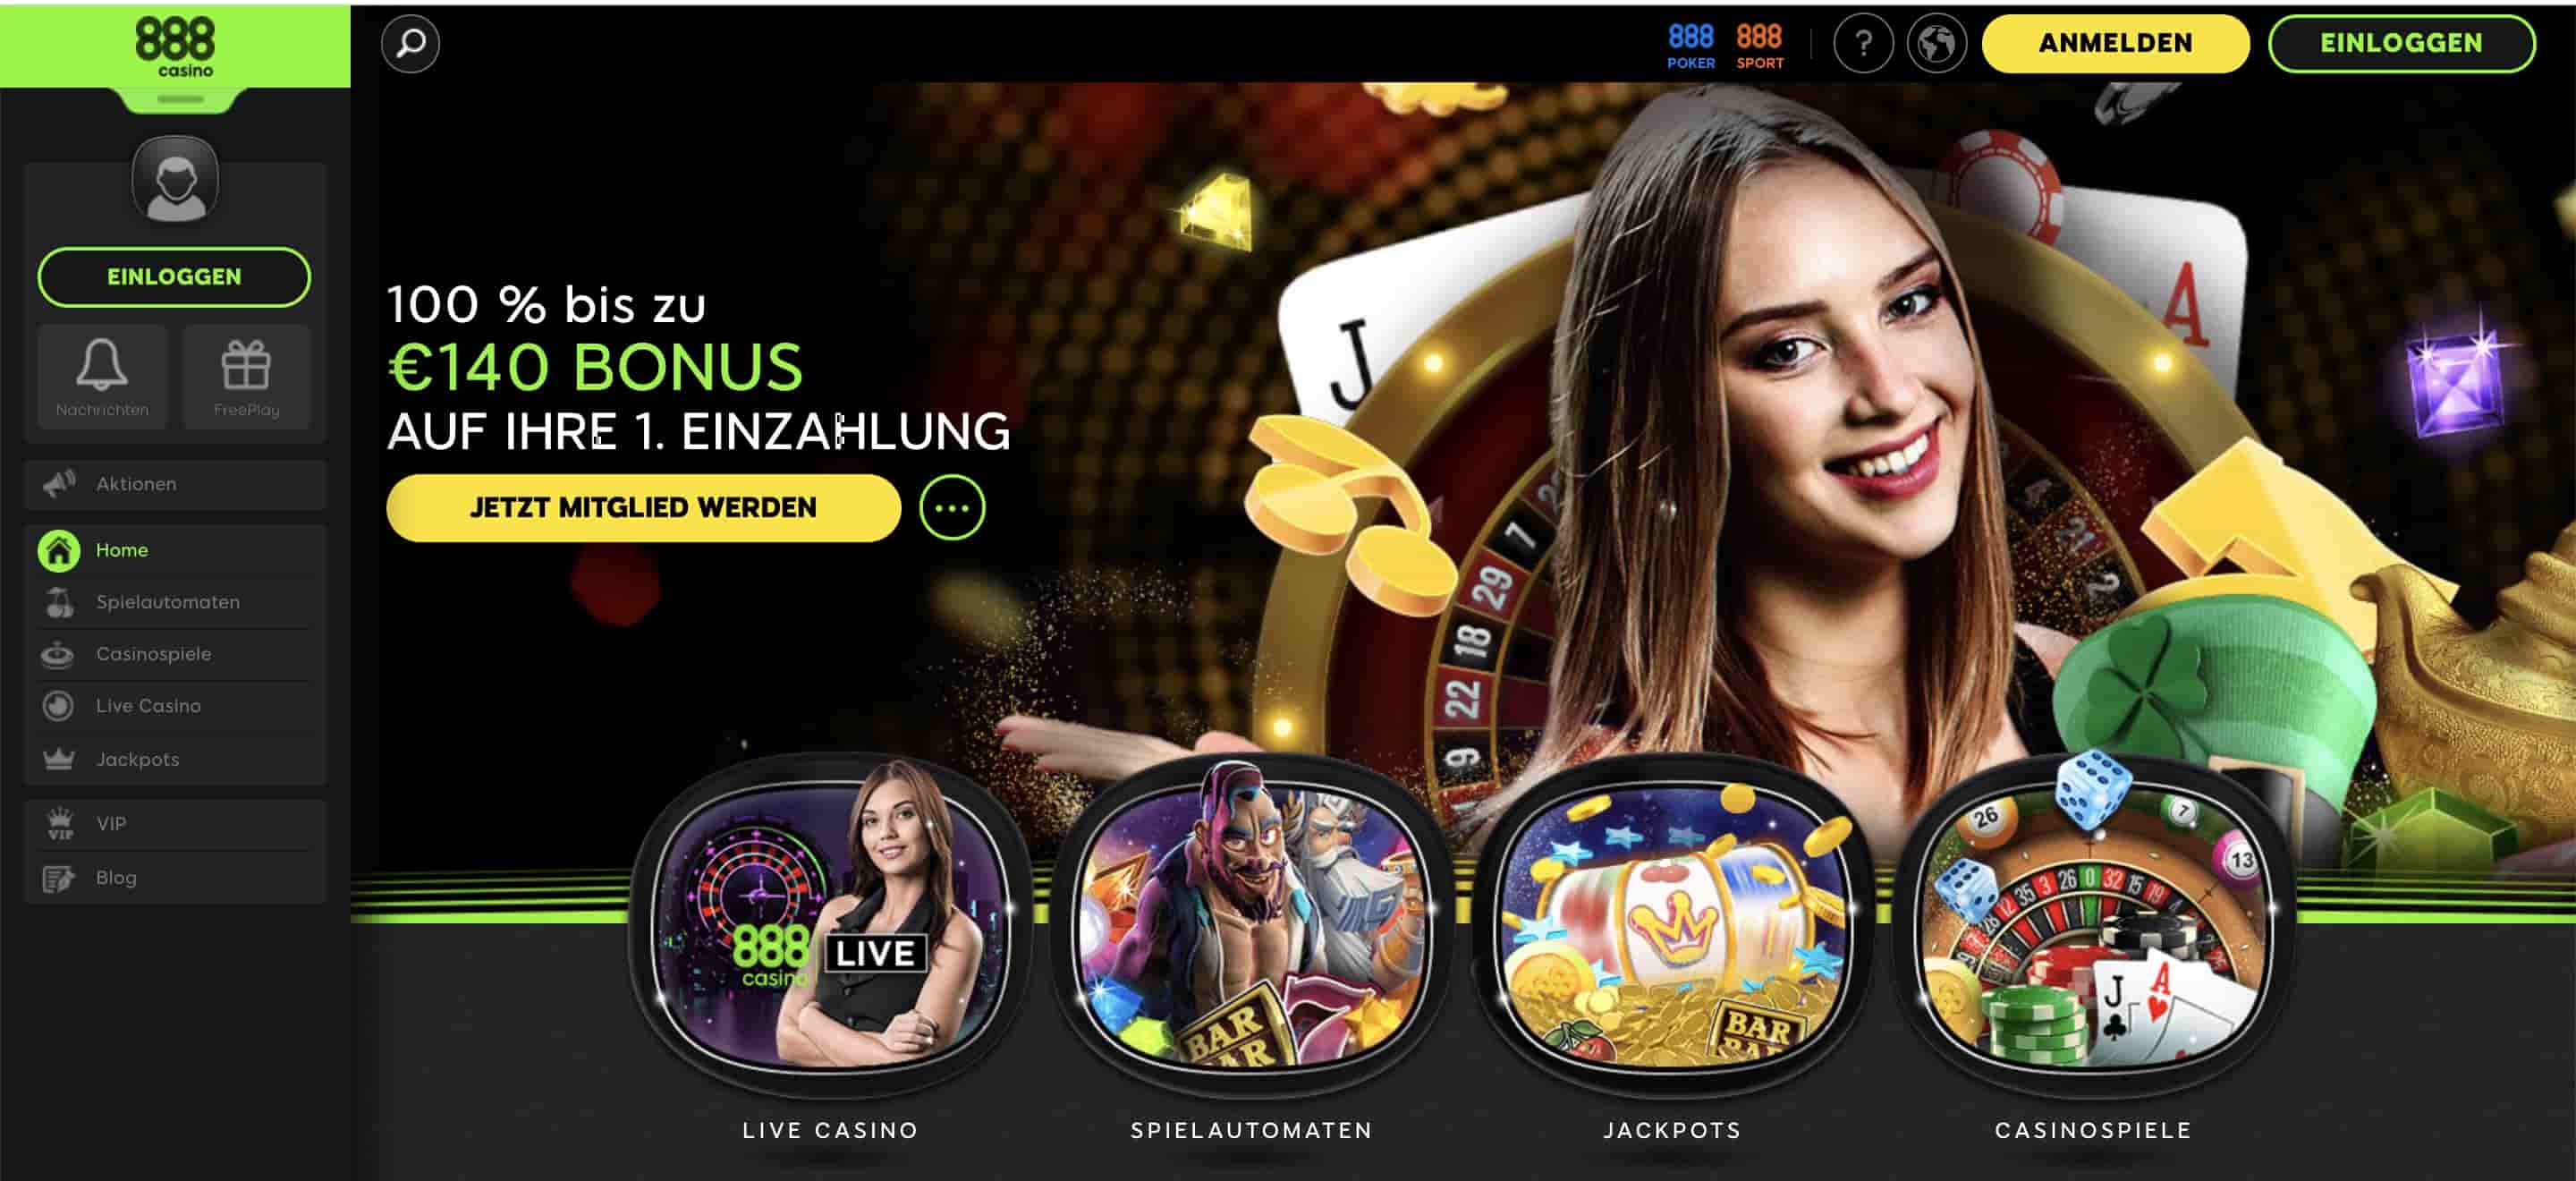 888 online casino homepage